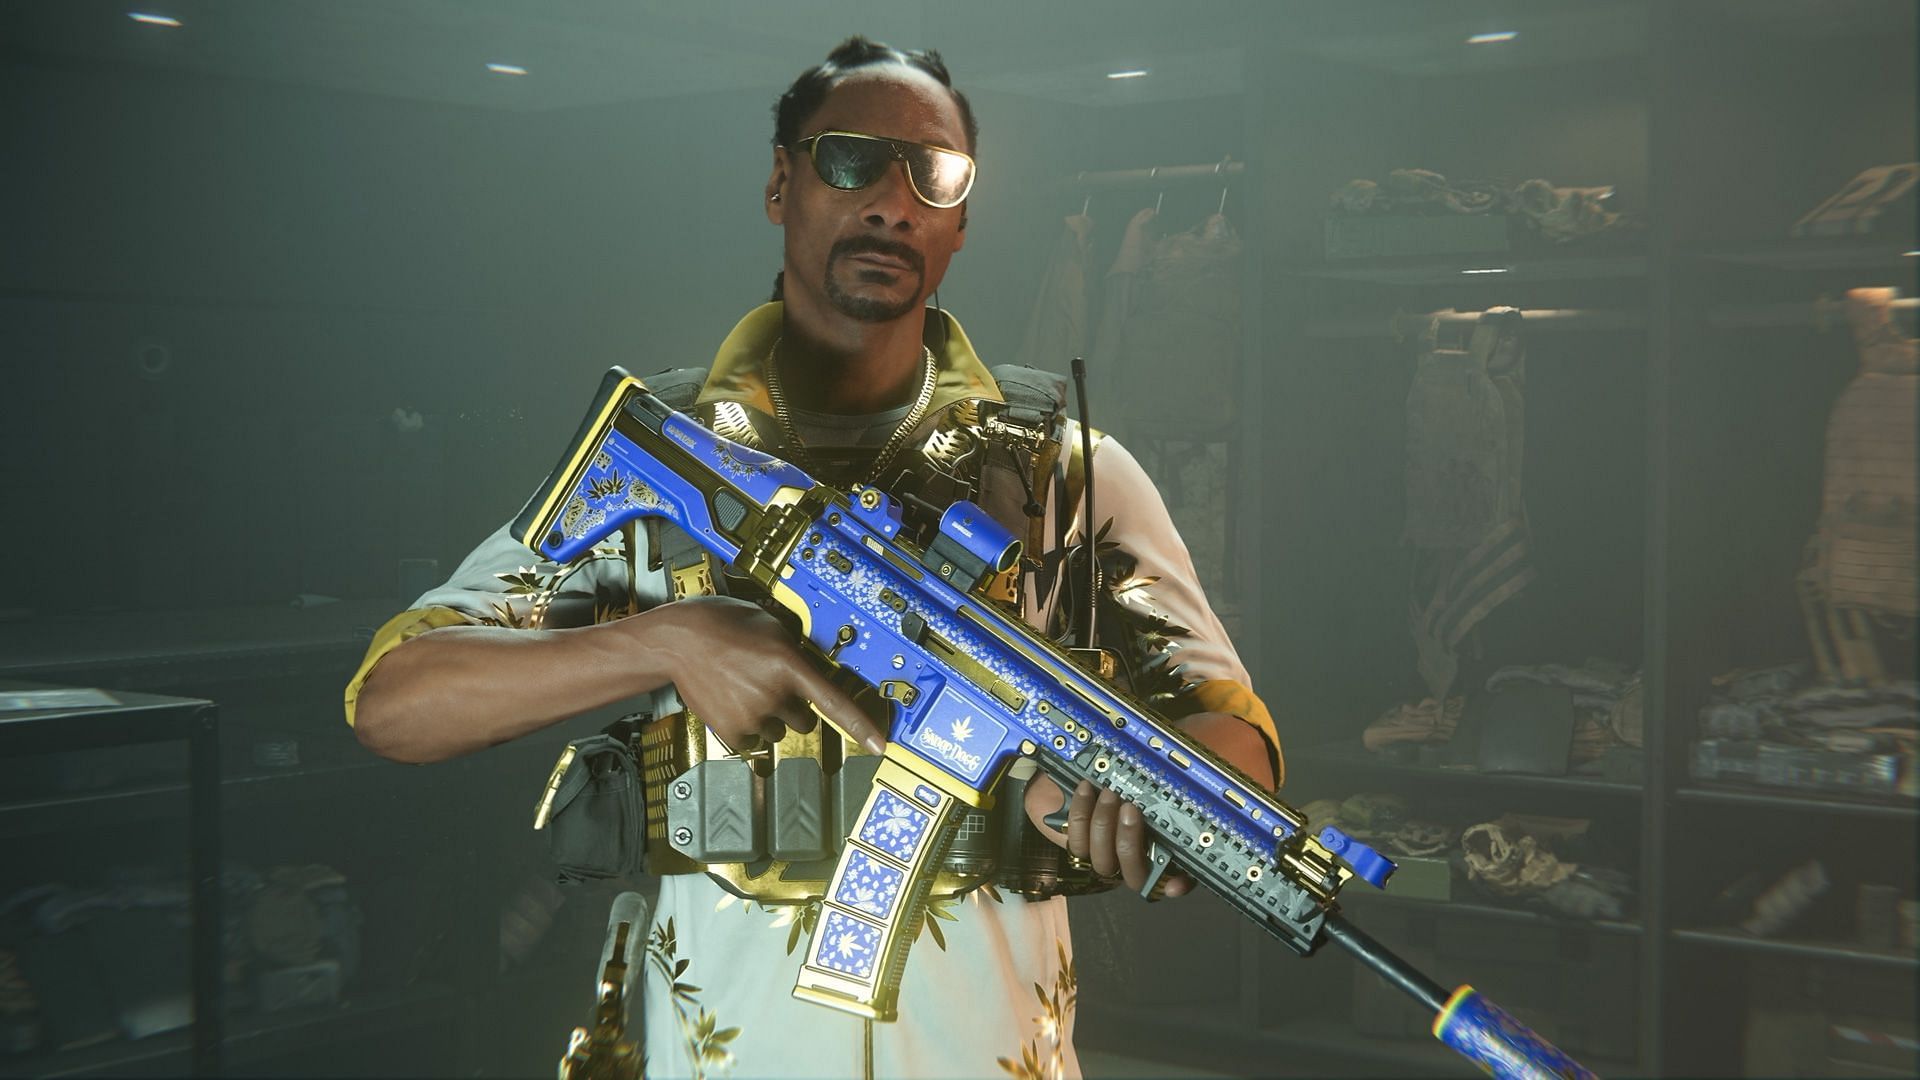 Snoop Dogg (Image via Activision)